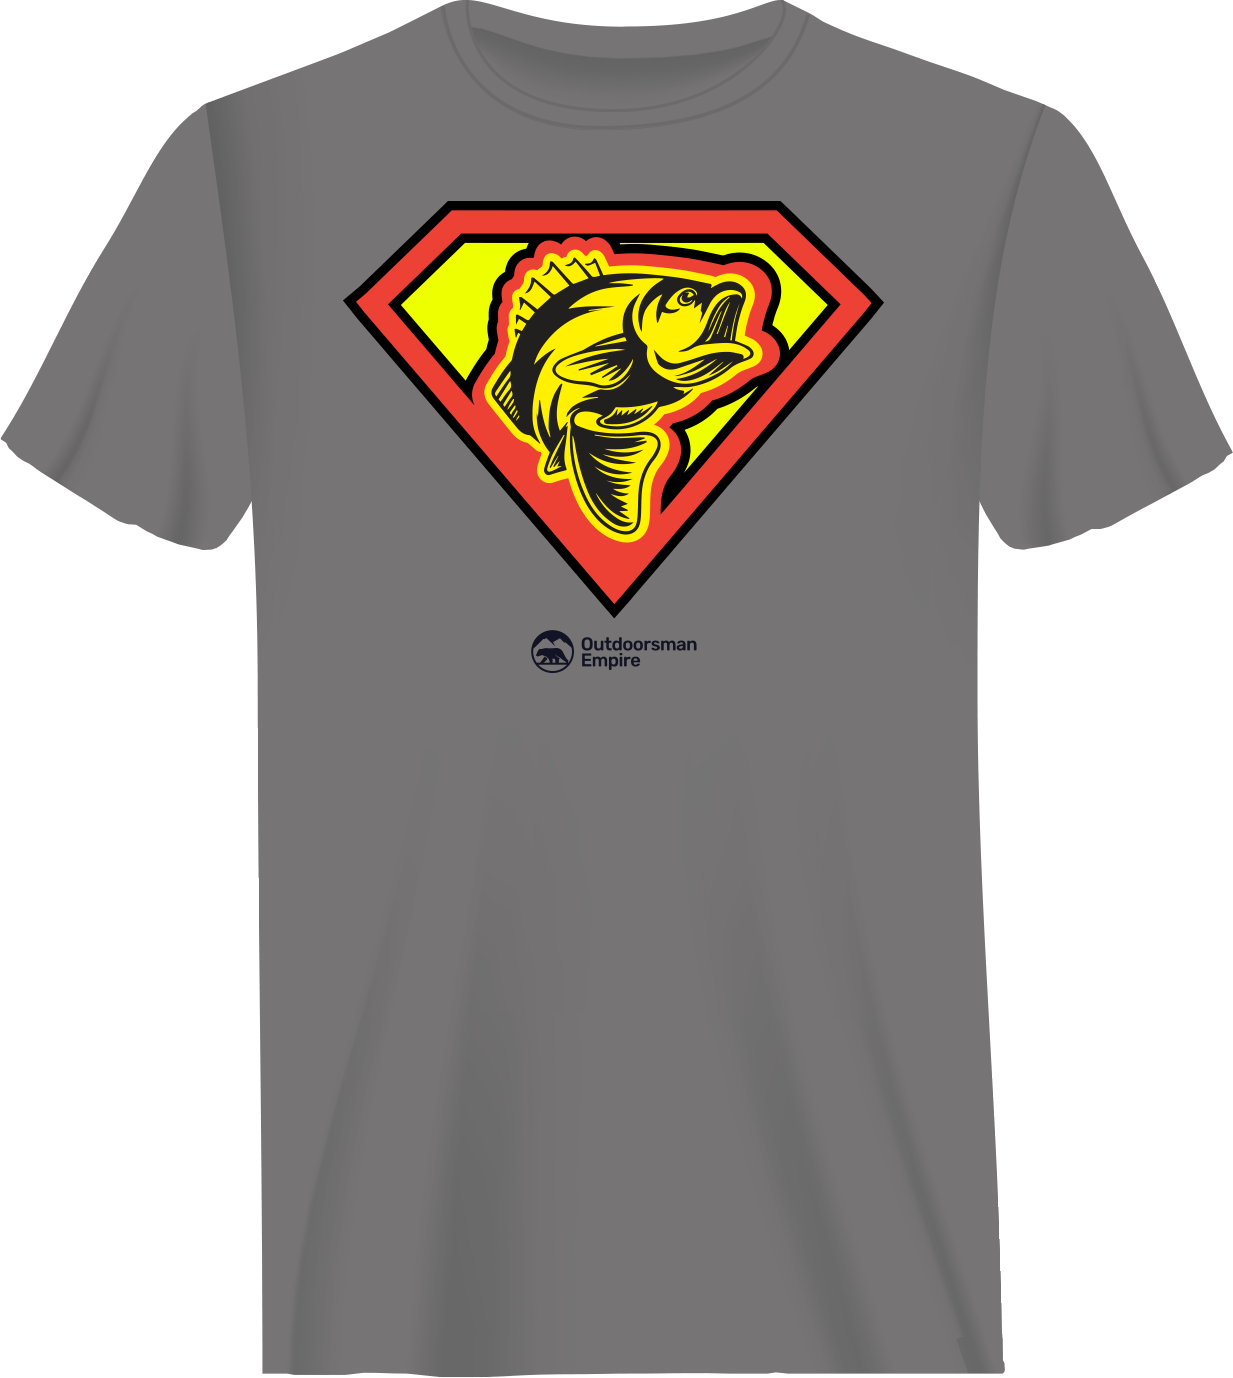 Super Fishing T-Shirt for Men